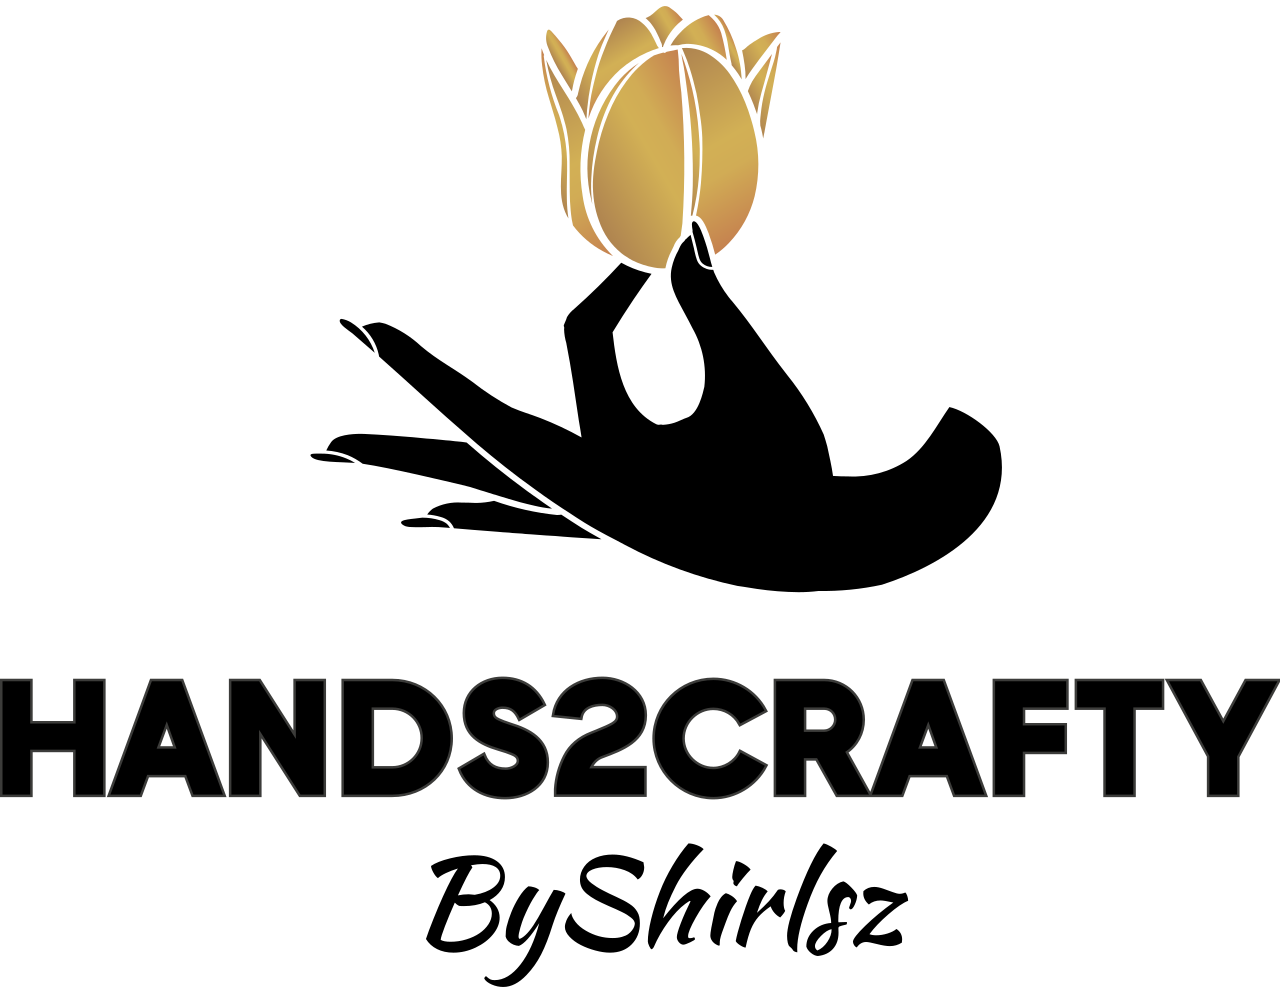 Hands2Crafty 's logo